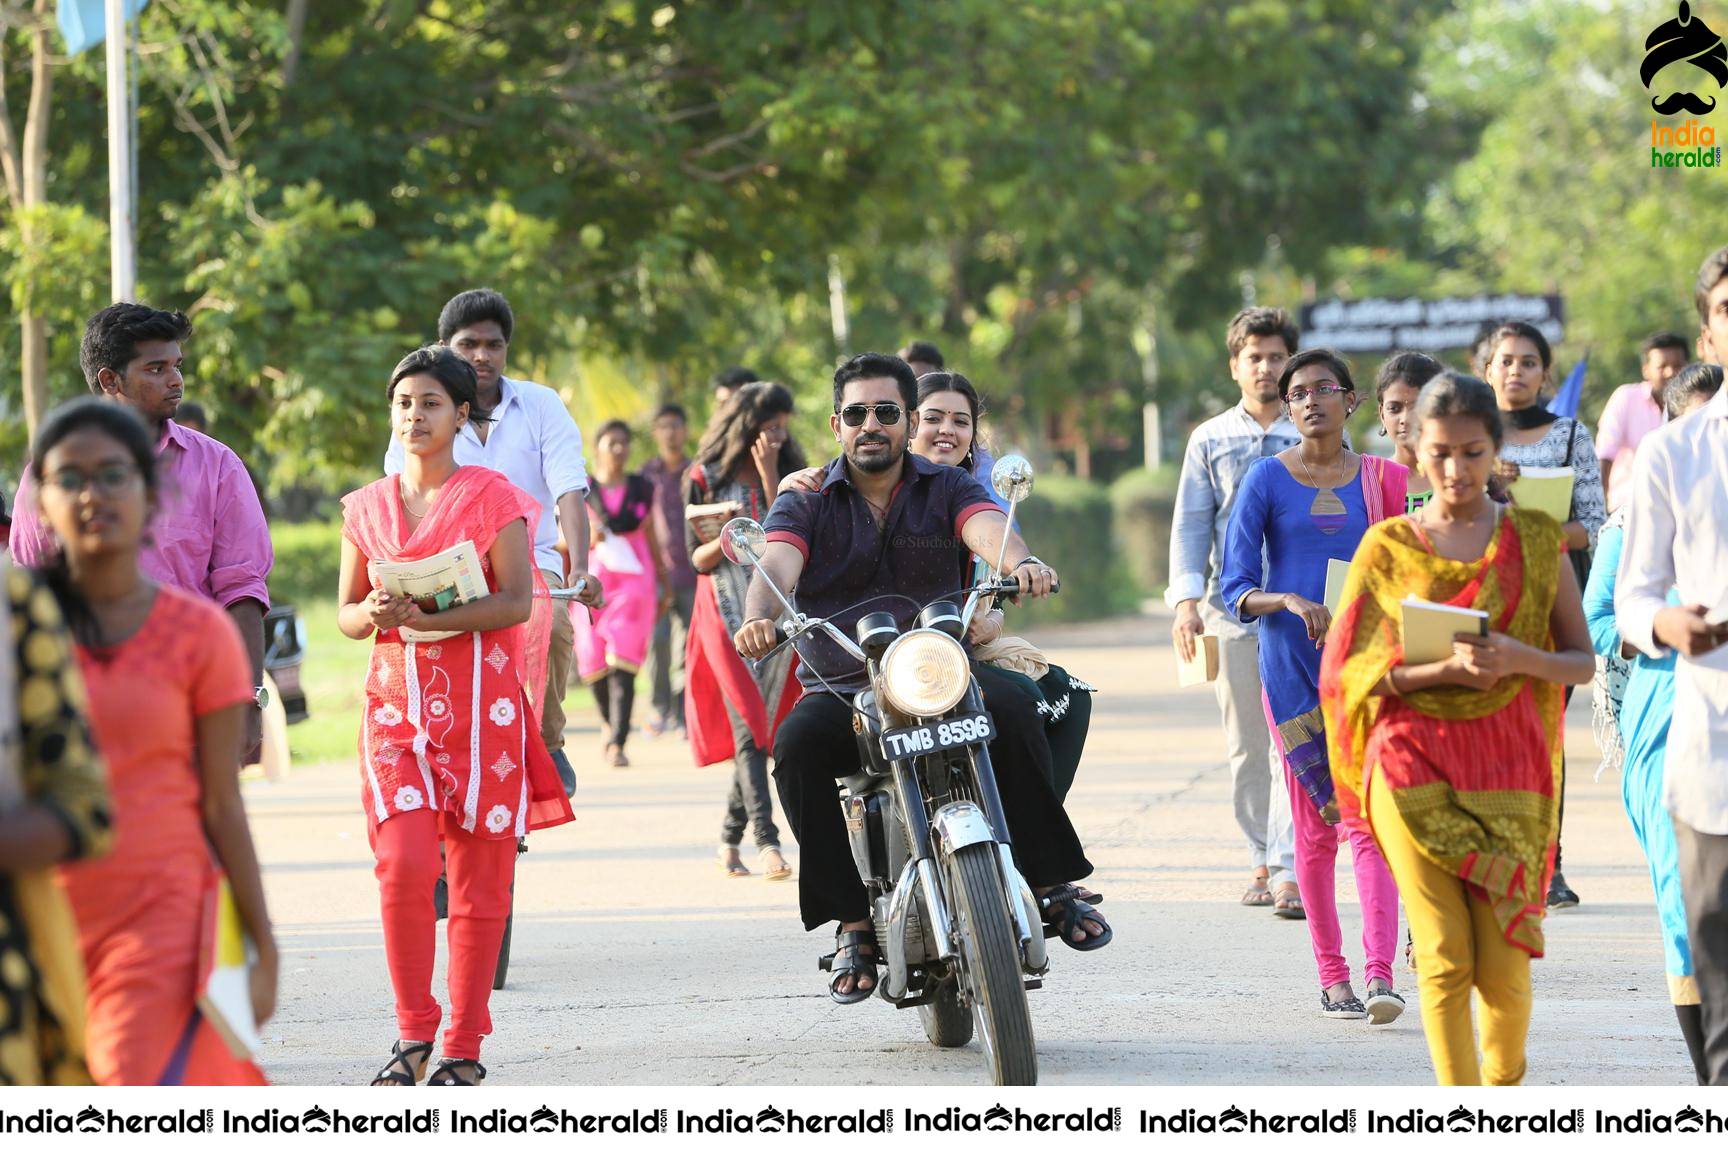 Actor Vijay Antony Photos from his Tamil release Set 2